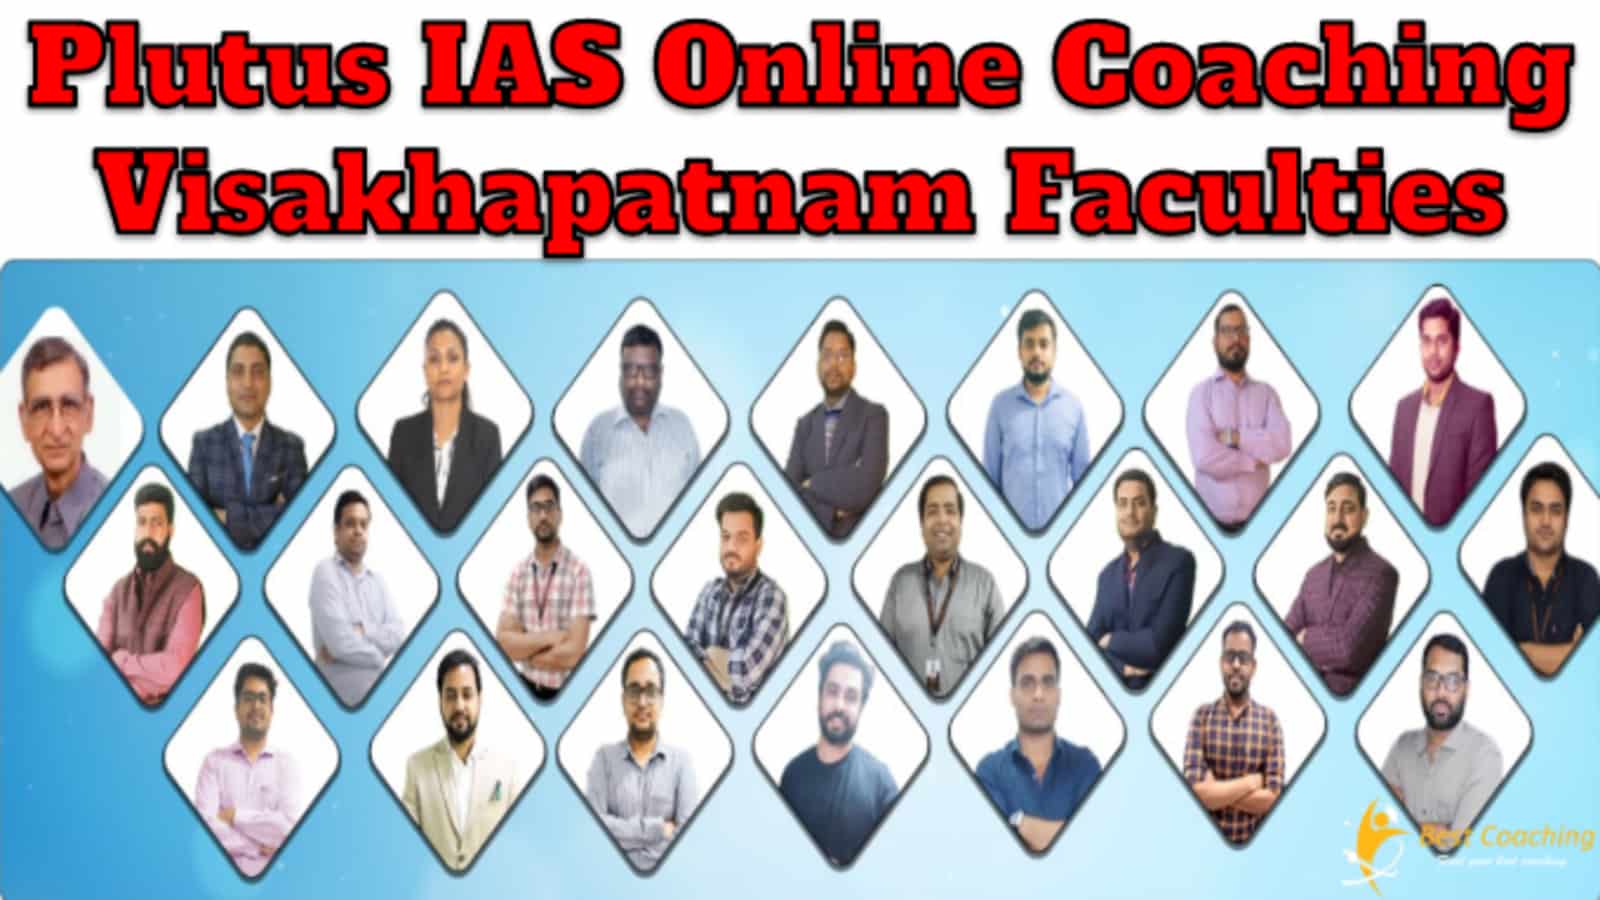 Plutus IAS Online Coaching Visakhapatnam Faculties